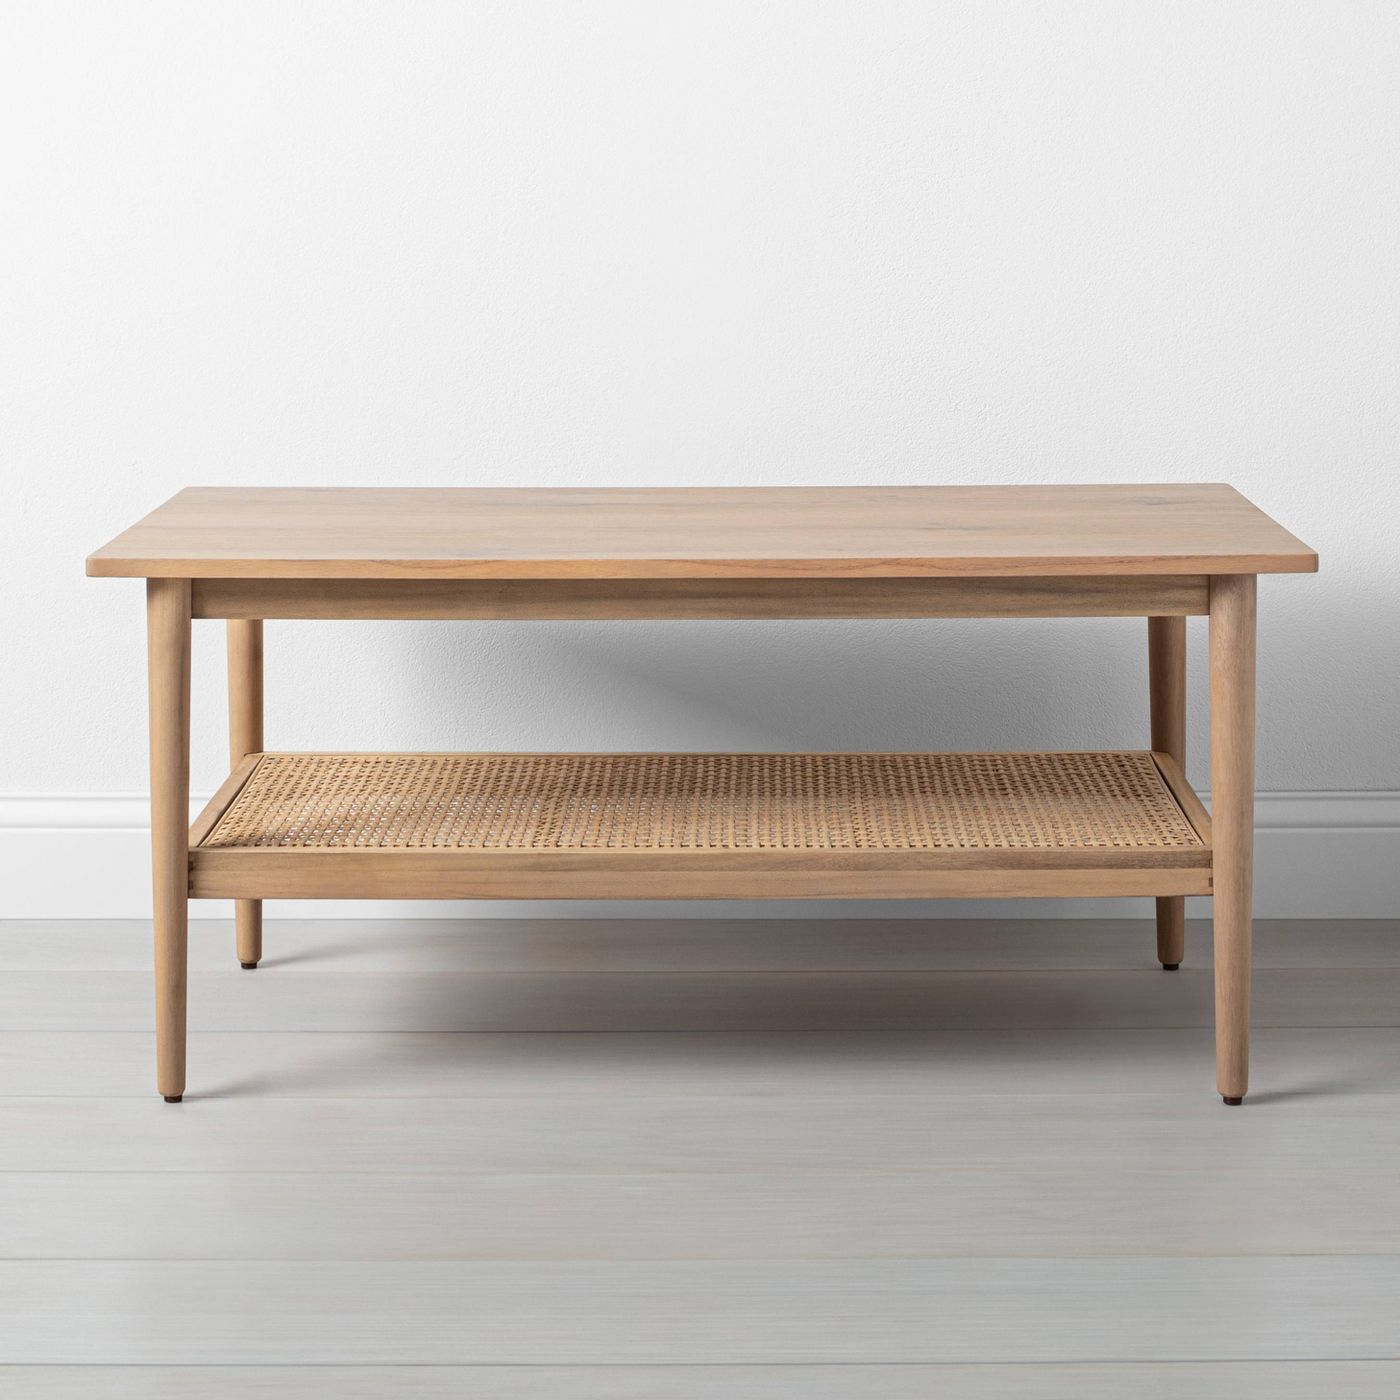 Wood & Cane Coffee Table 1058